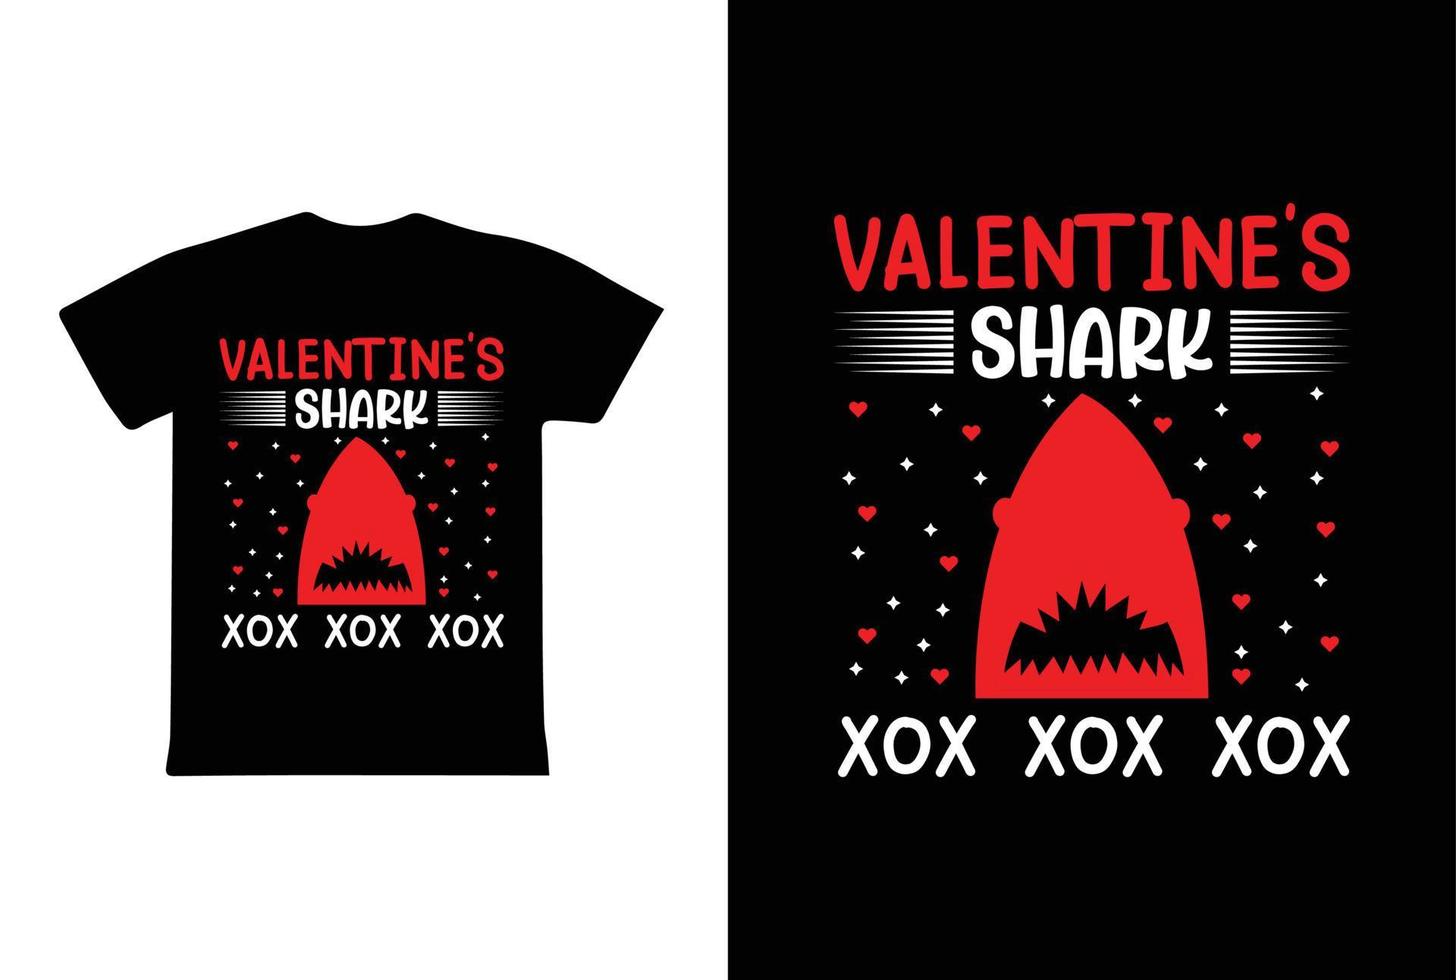 conception de t-shirt requin xox de la saint-valentin, modèle de conception de t-shirt de la saint-valentin vecteur